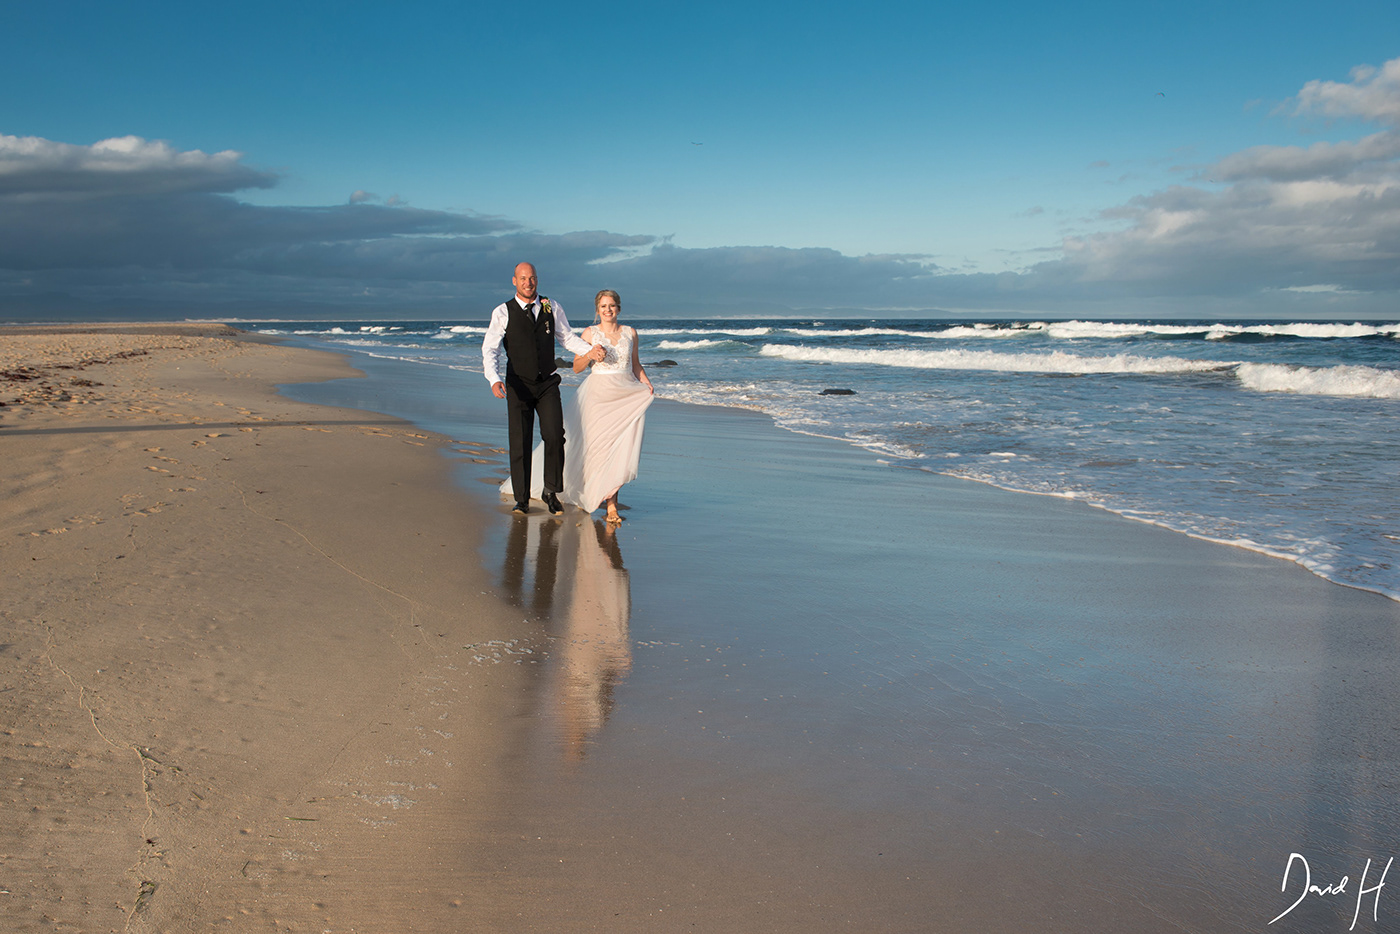 bride DHPhotography jeffreys bay Jeffreysbaai marriage portrait surfing wedding Wedding Photographer Wedding Photography